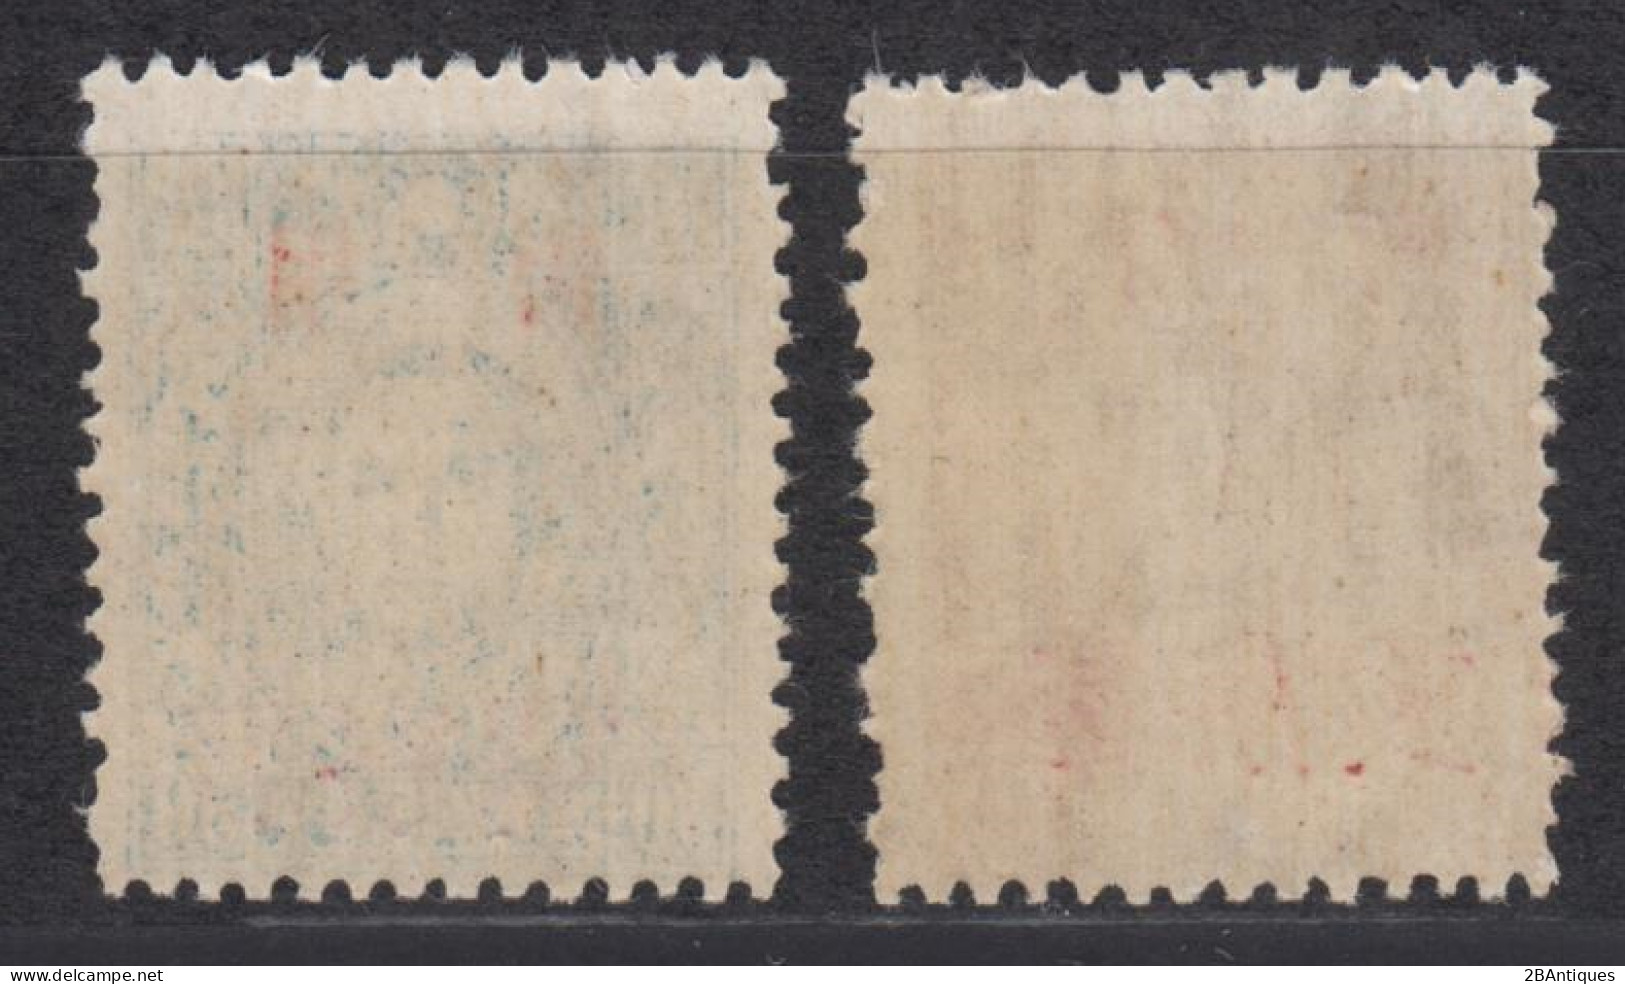 NORTH CHINA SHANXI-QAHAR-HEBEI 1945 - Inner Mongolia Stamps With Overprint "Ji Cha Jin" - China Dela Norte 1949-50